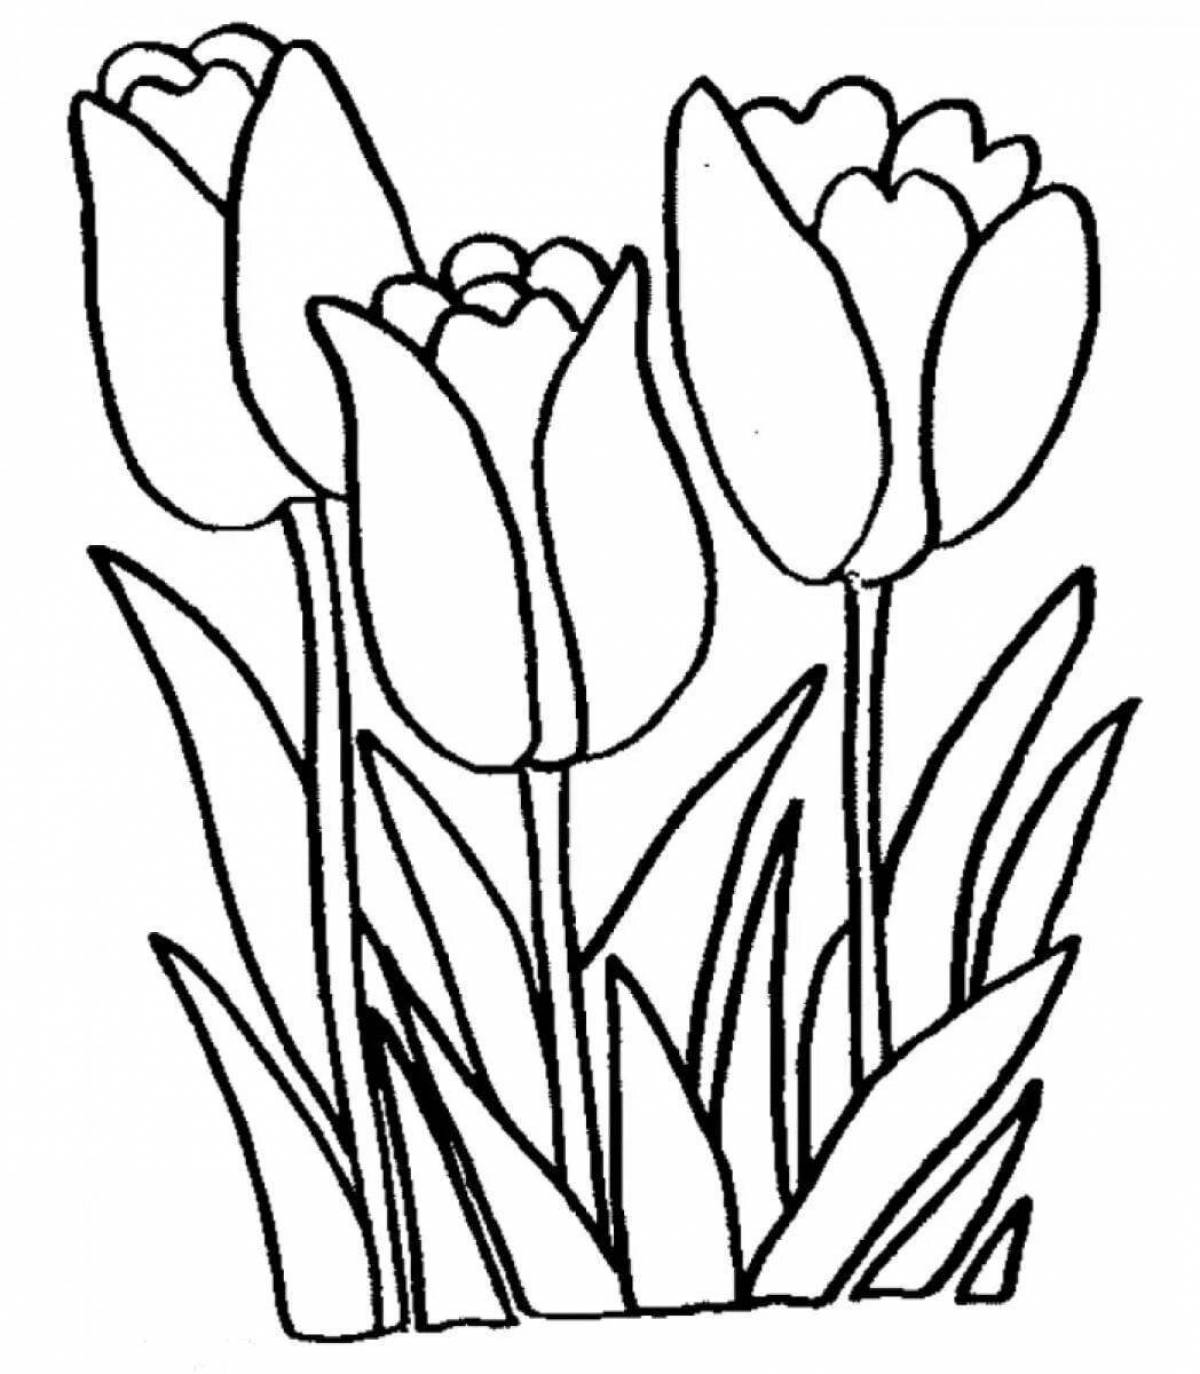 Coloring page wild tulip